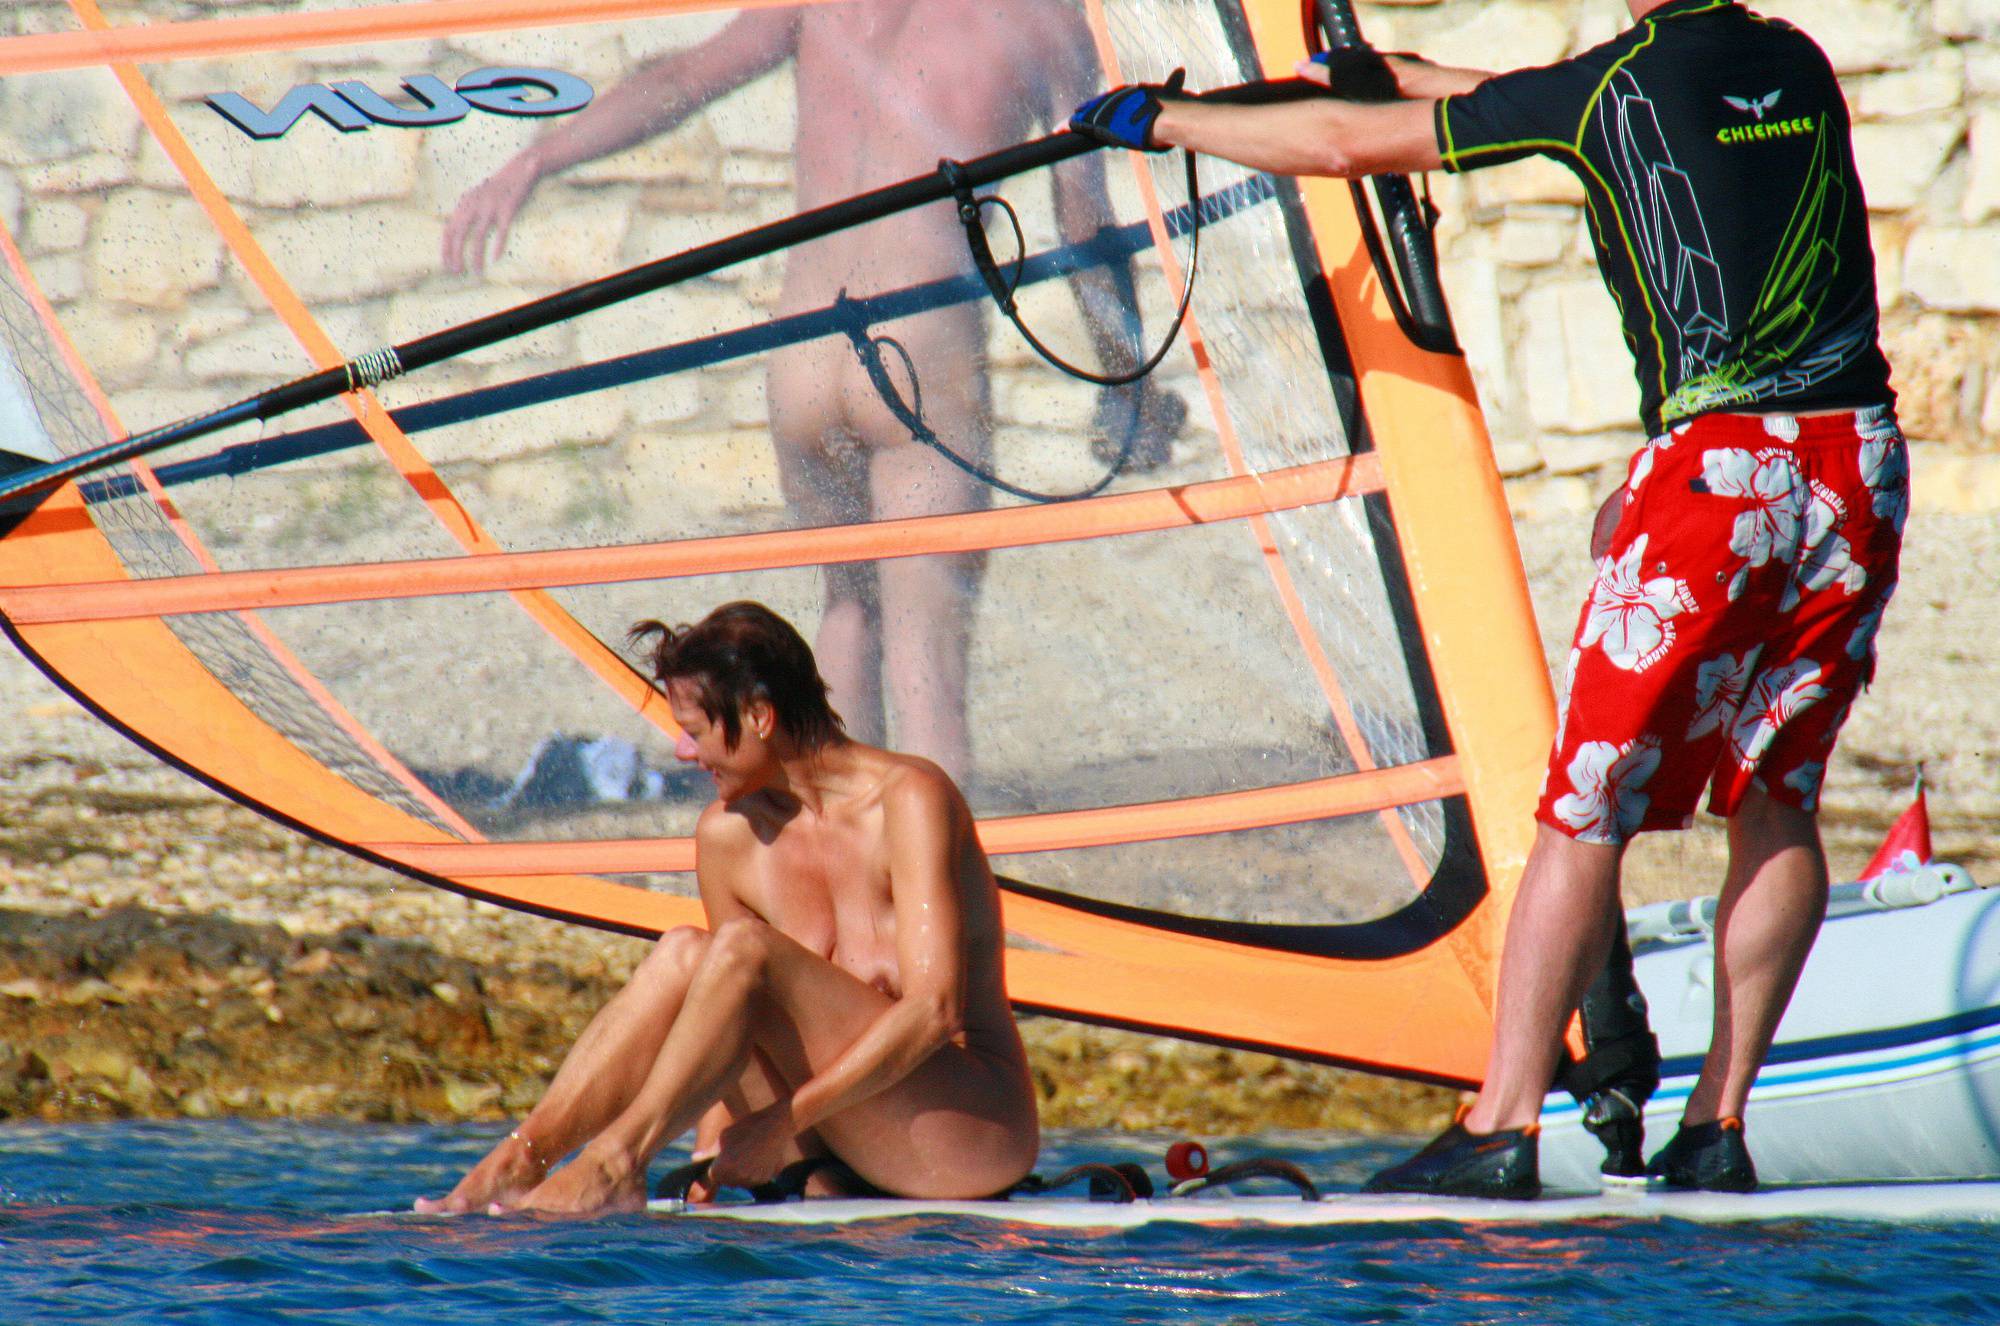 Nudist Photos Uka FKK Boating Day Plans - 2